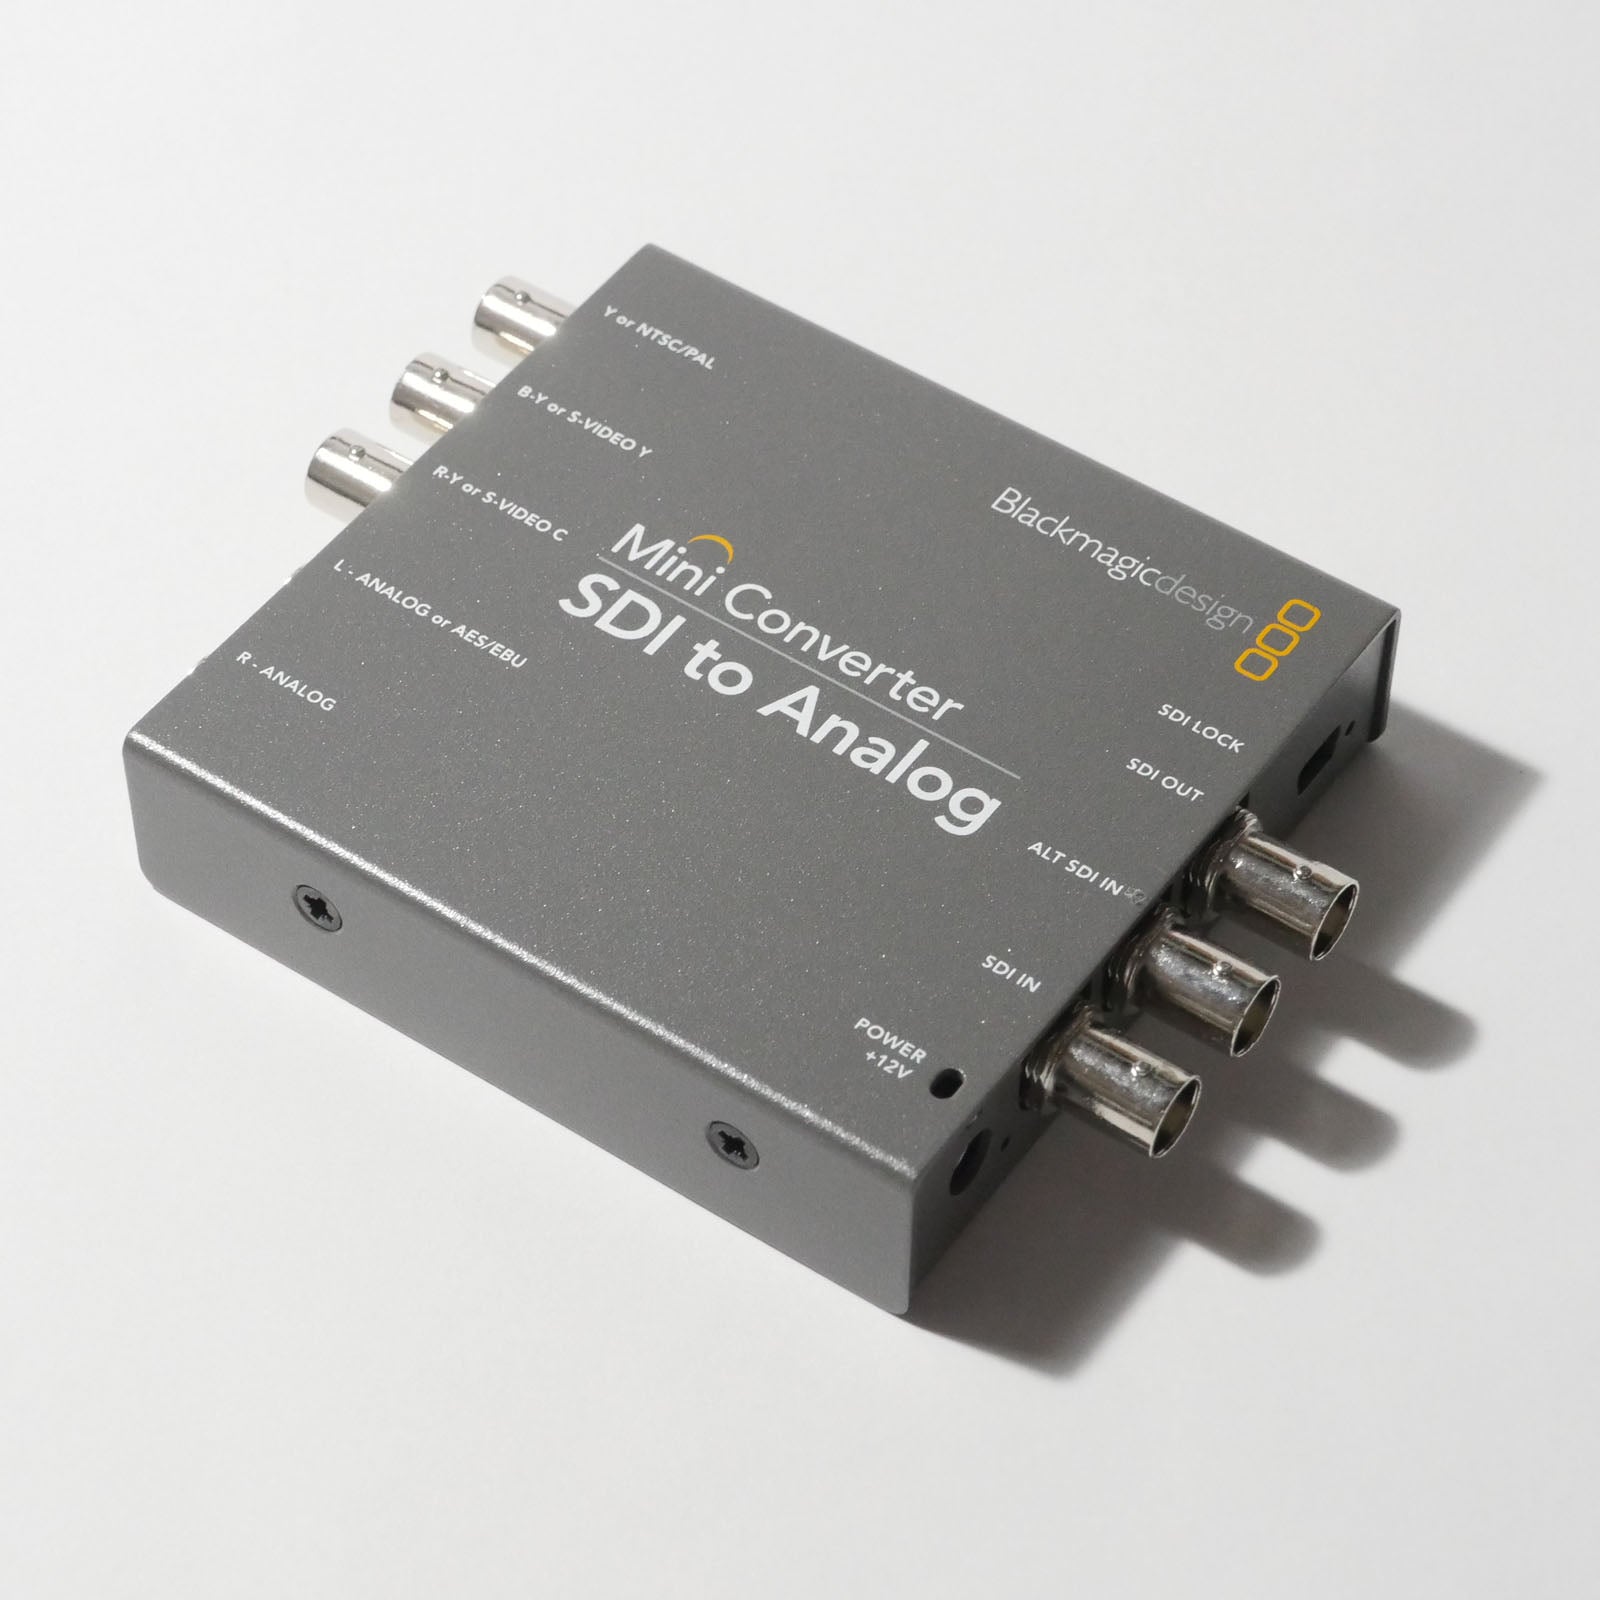 Blackmagic Design(ブラックマジックデザイン) コンバーター Mini Converter SDI to Analog CONVMASA 中古品